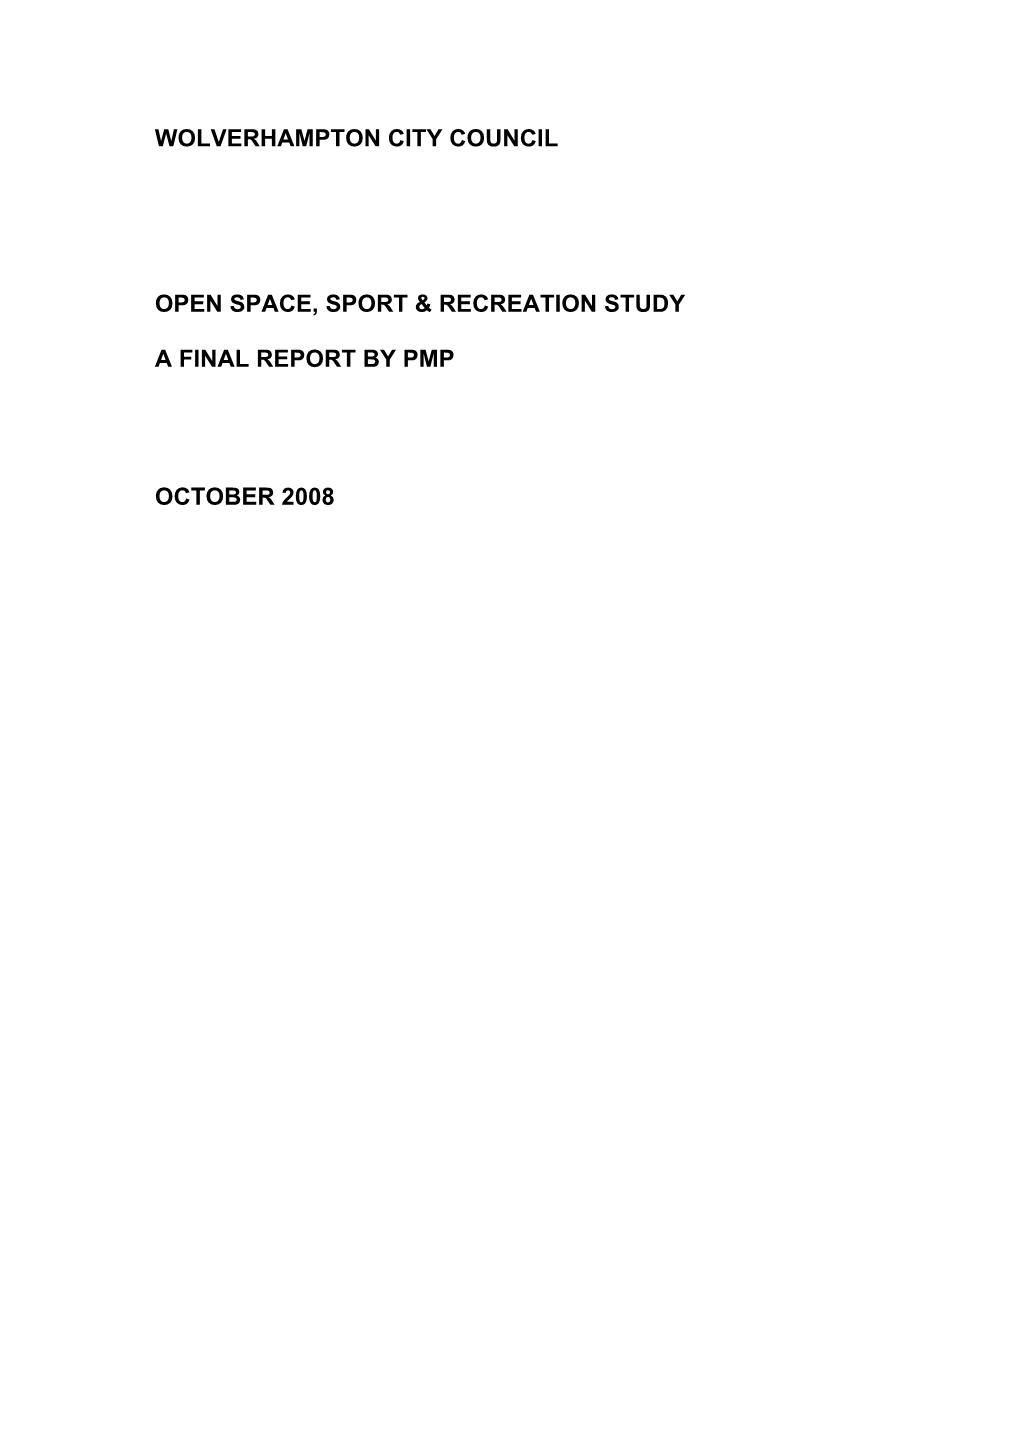 Wolverhampton City Council Open Space, Sport & Recreation Study A